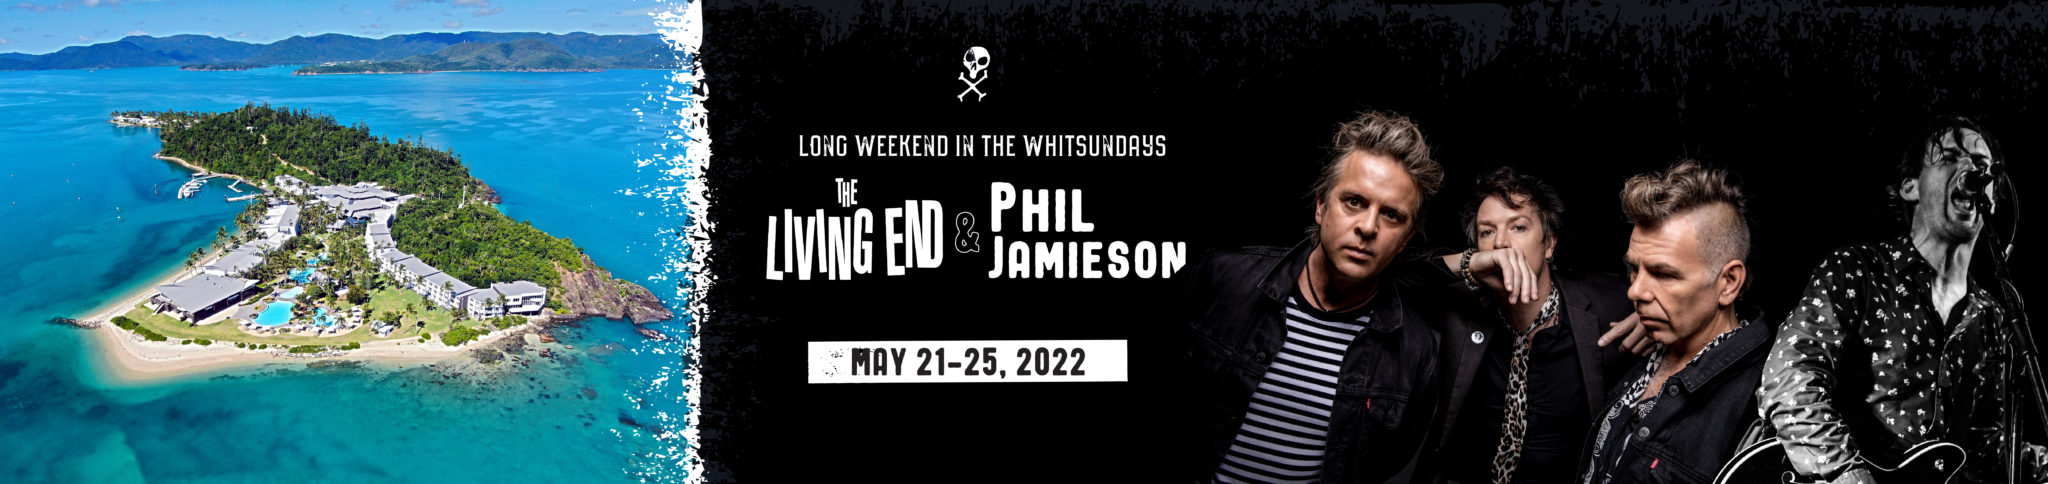 Living End Phil Jamieson Daydream